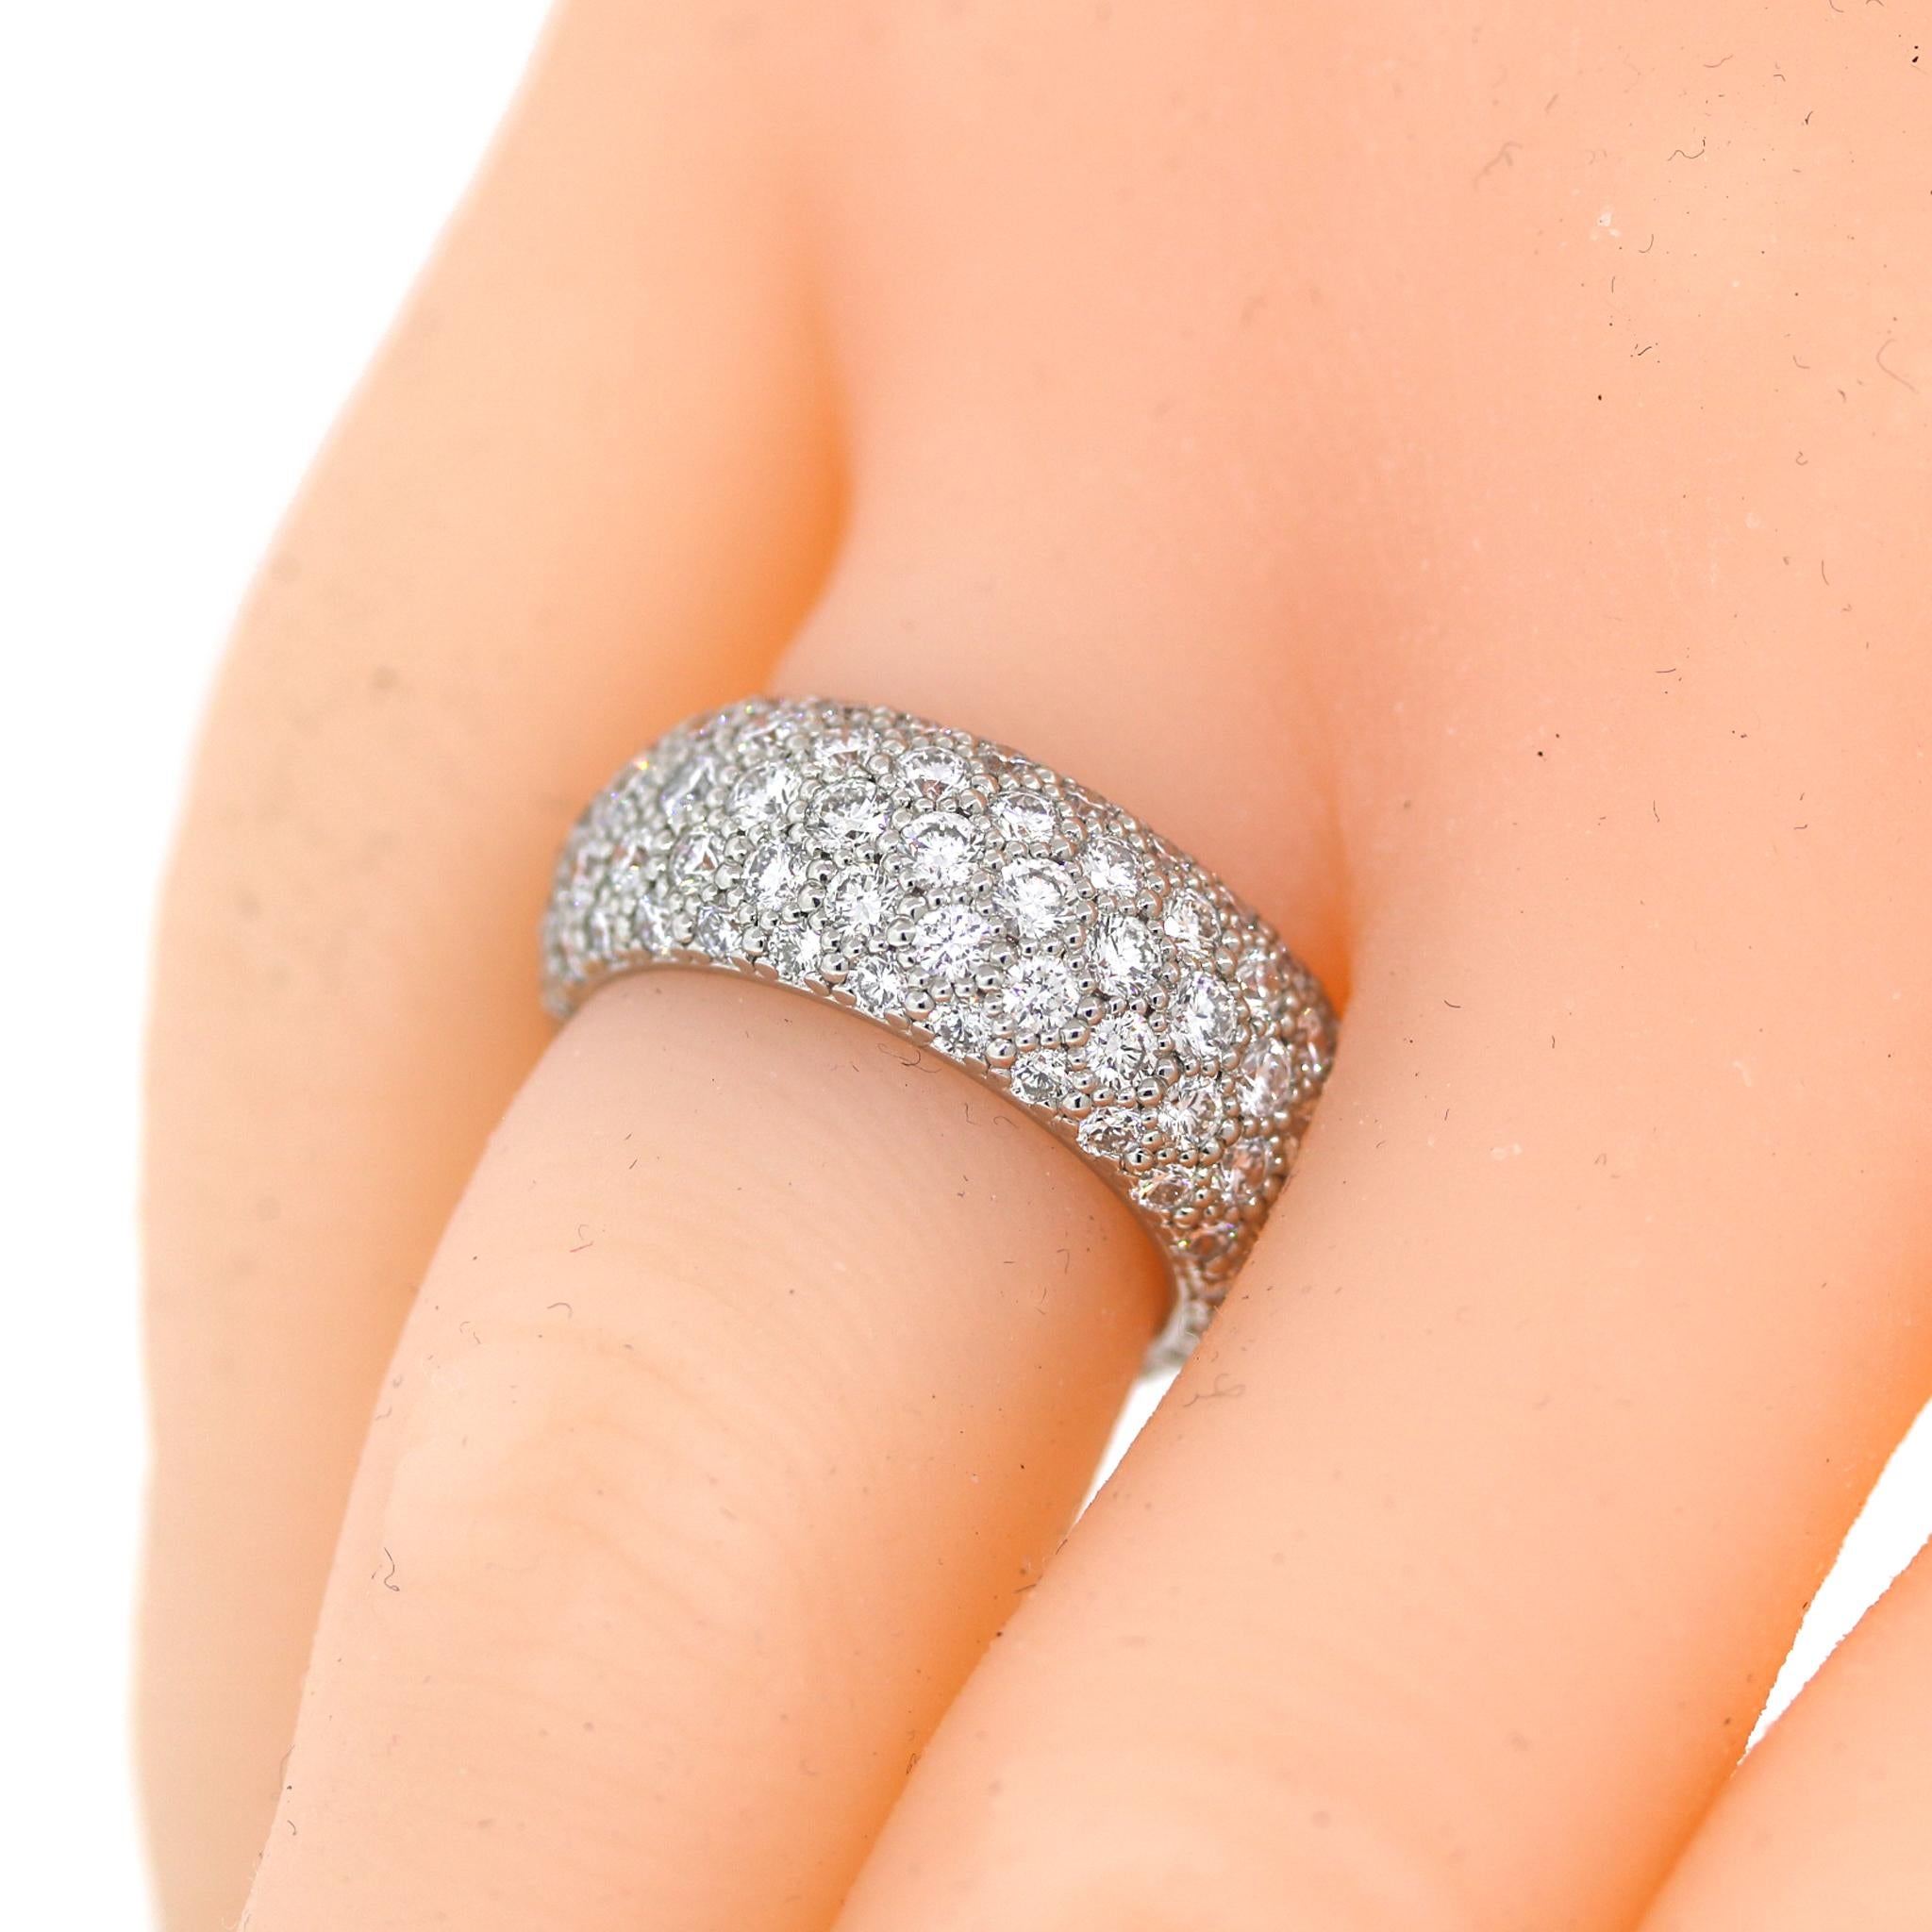 Platinum
Diamond: 3.30 ct twd
Round Brilliant Cut 
5-row diamond band ring
Ring size: 5.75